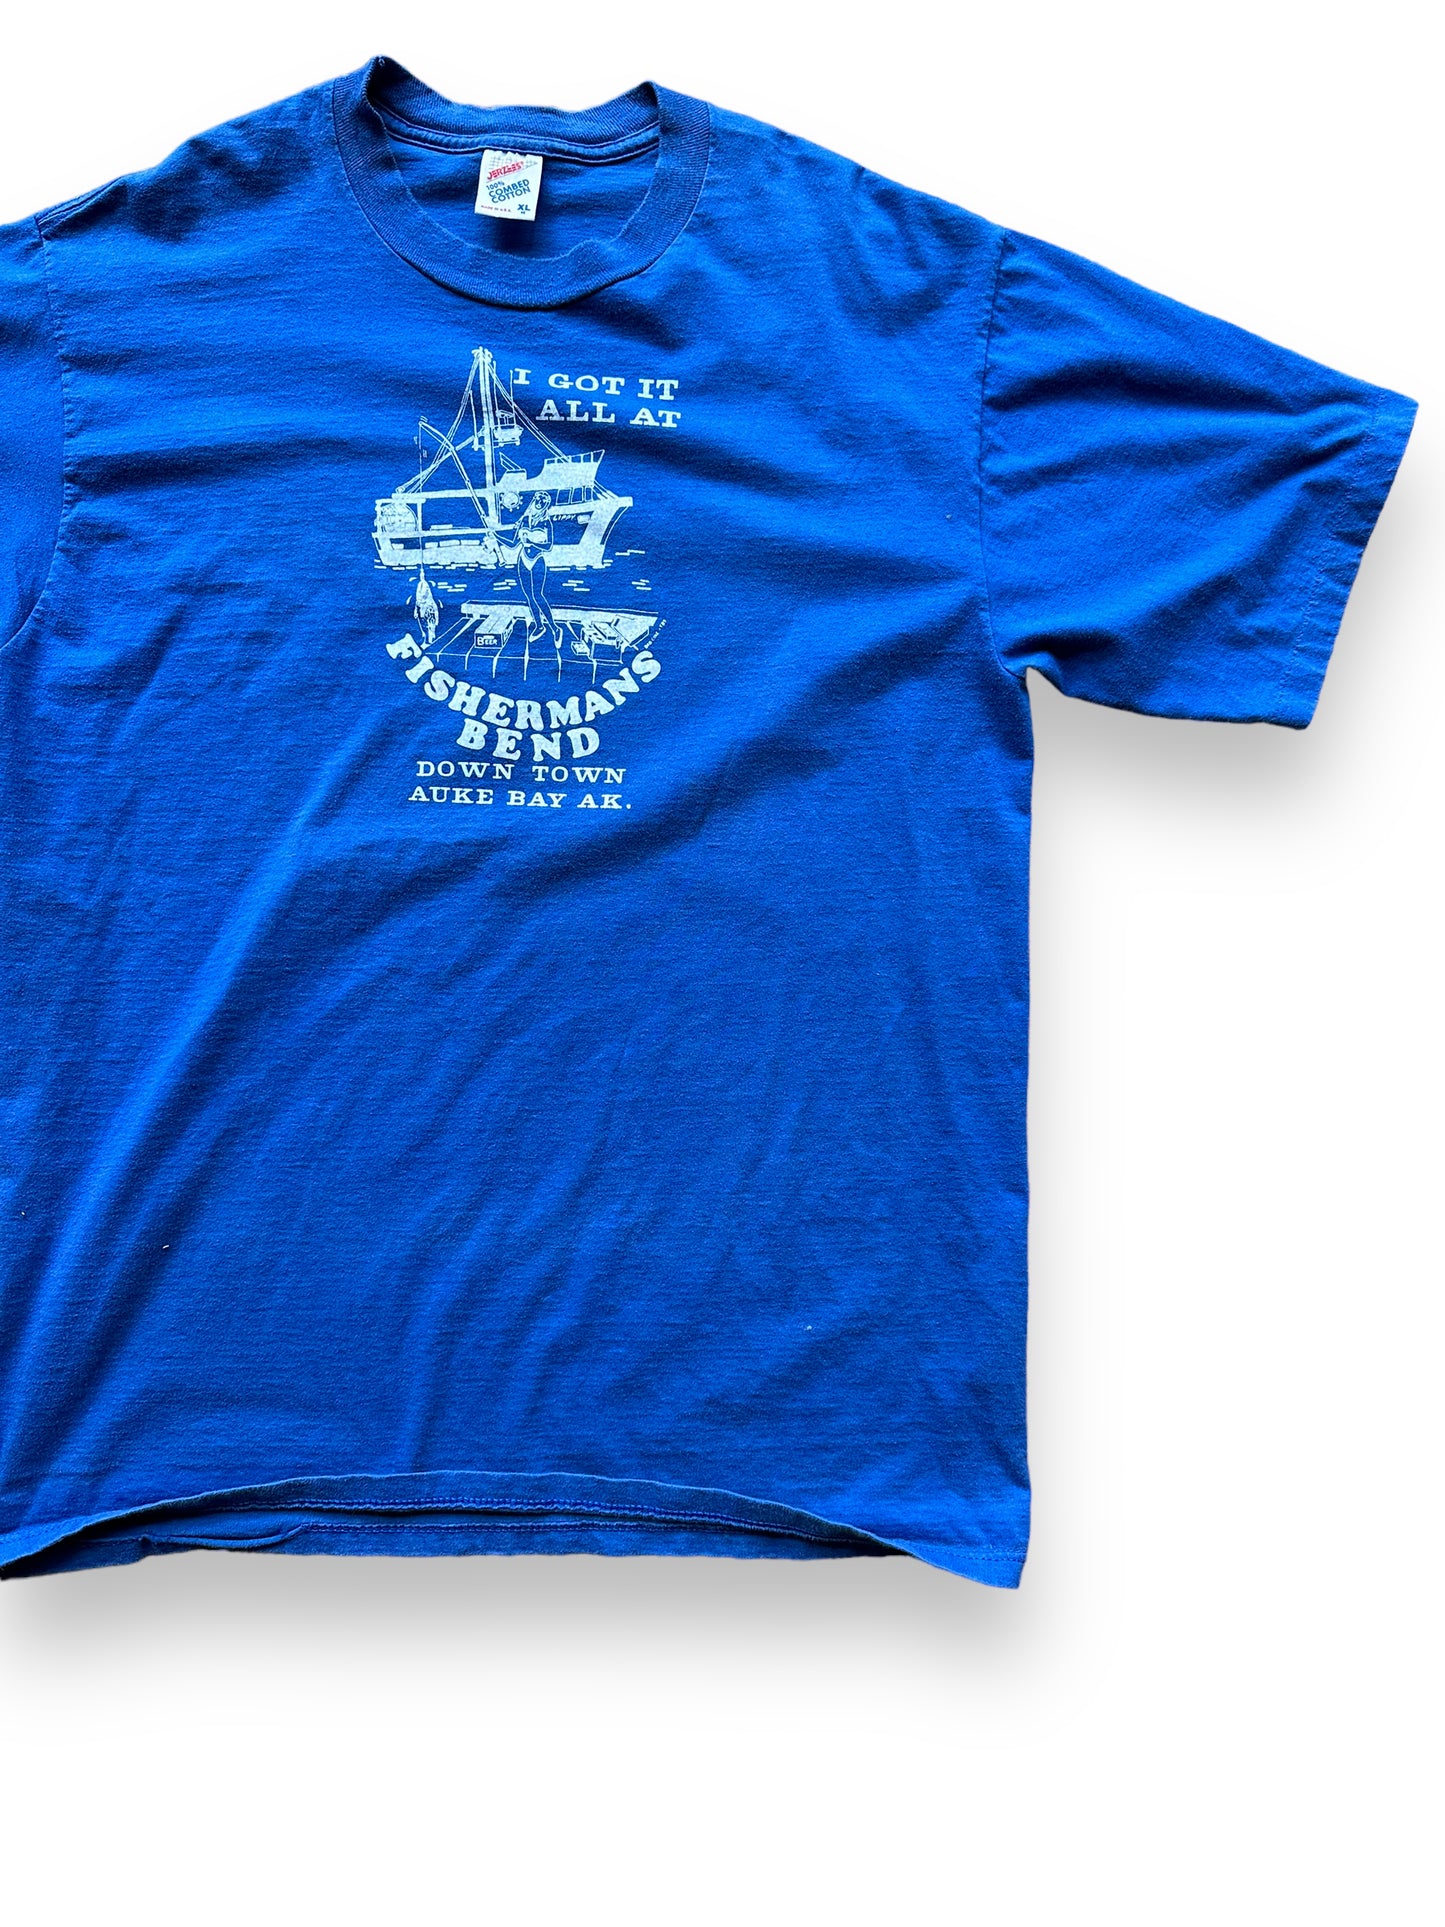 Front left of Vintage Fishermens Bend Alaska Tee SZ XL | Vintage Alaska T-Shirts Seattle | Barn Owl Vintage Tees Seattle